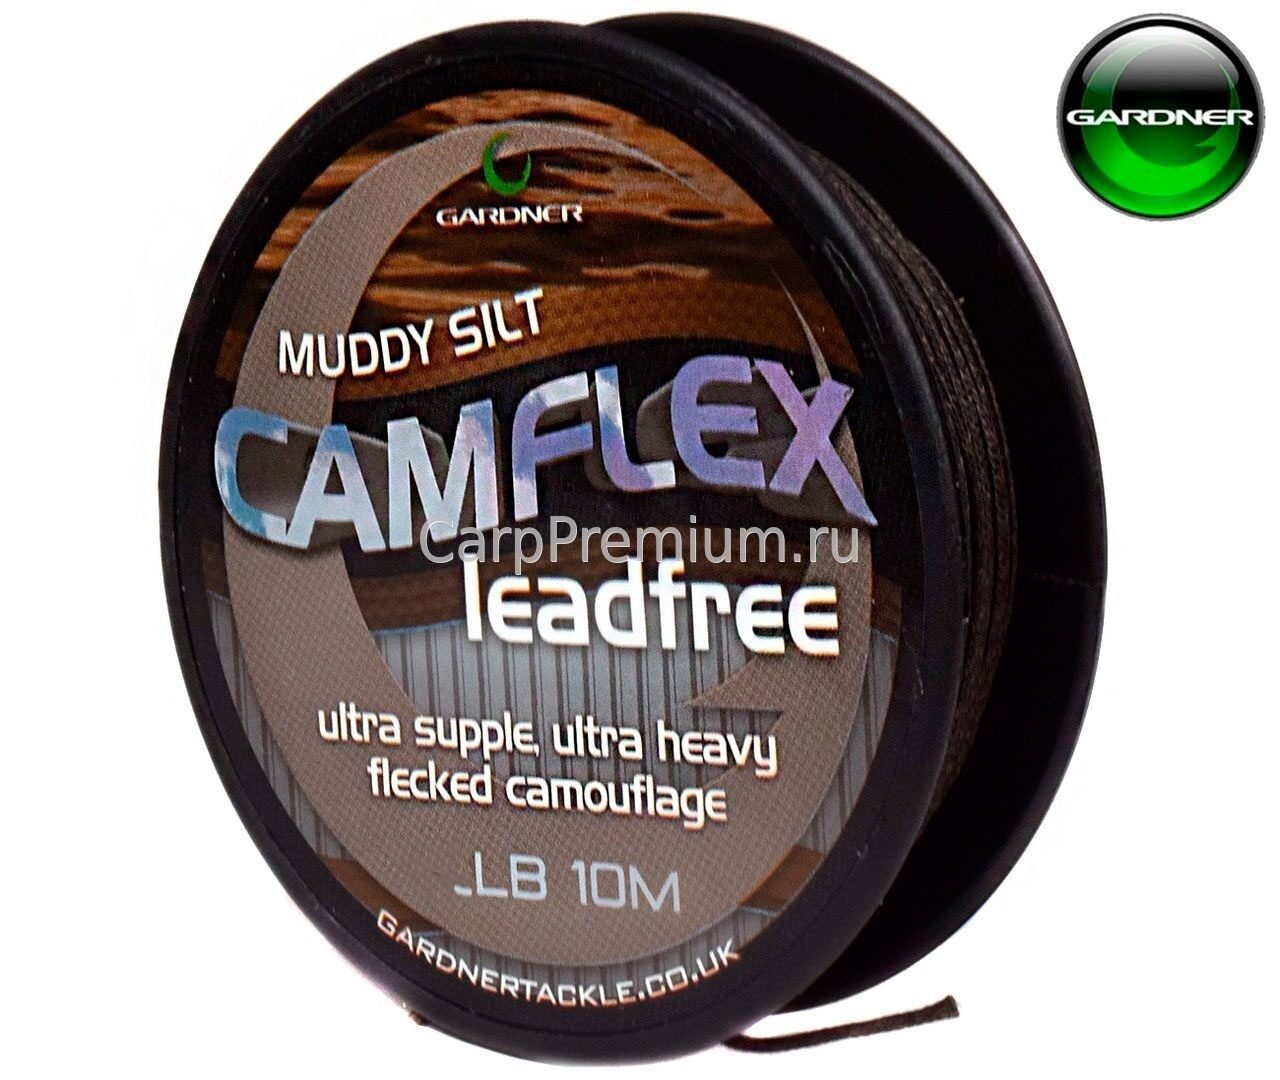 Лидкор без свинцового сердечника Серый Gardner (Гарднер) - CamFlex Continental Leadfree Muddy Silt 29.5 кг / 65 lb, 10 м